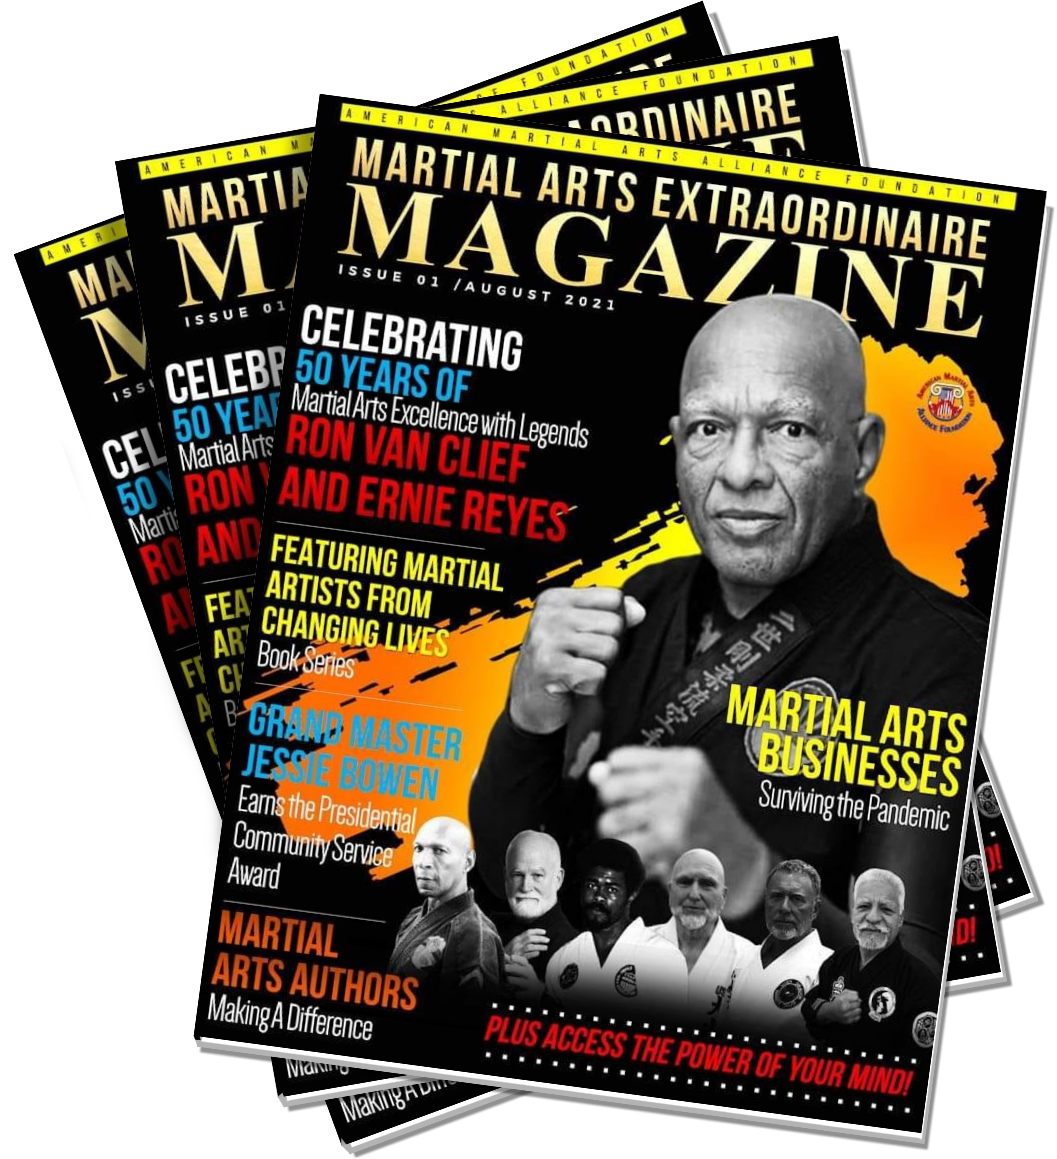 Martial Arts Extraordinaire Magazine: FREE DOWNLOAD